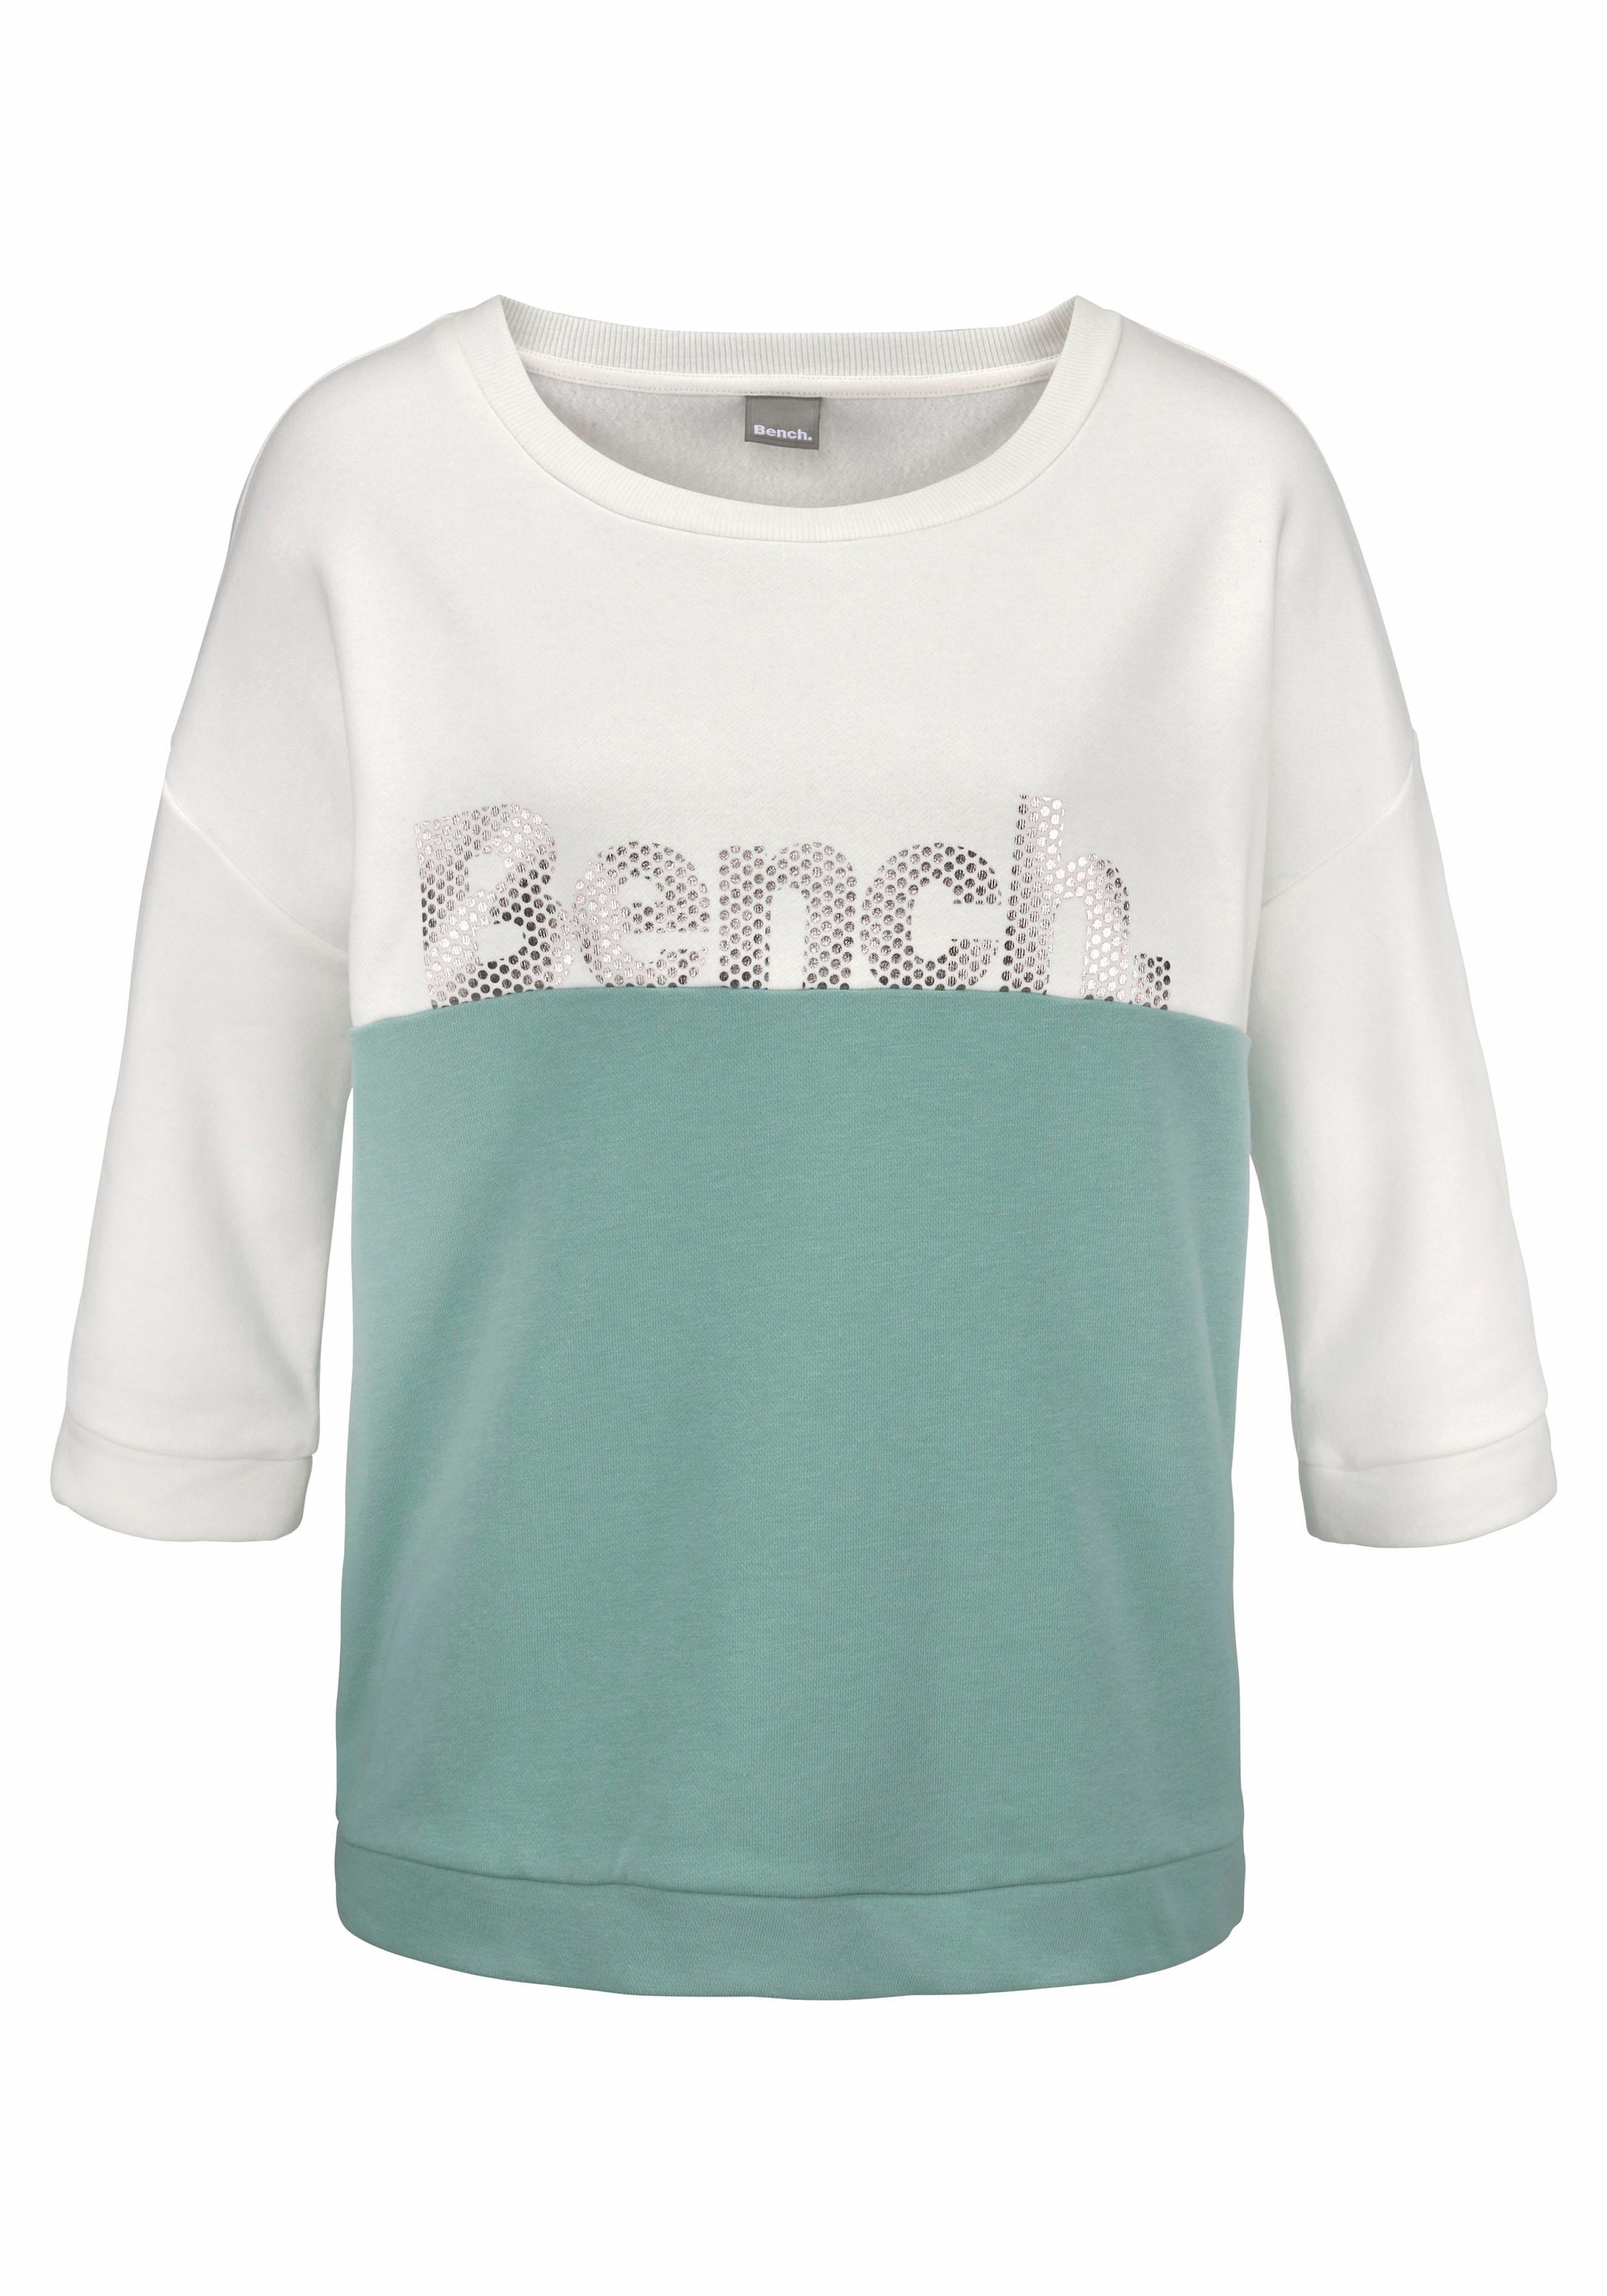 Bench. Sweatshirt, im Colorblocking Design, shoppen Loungewear, Loungeanzug